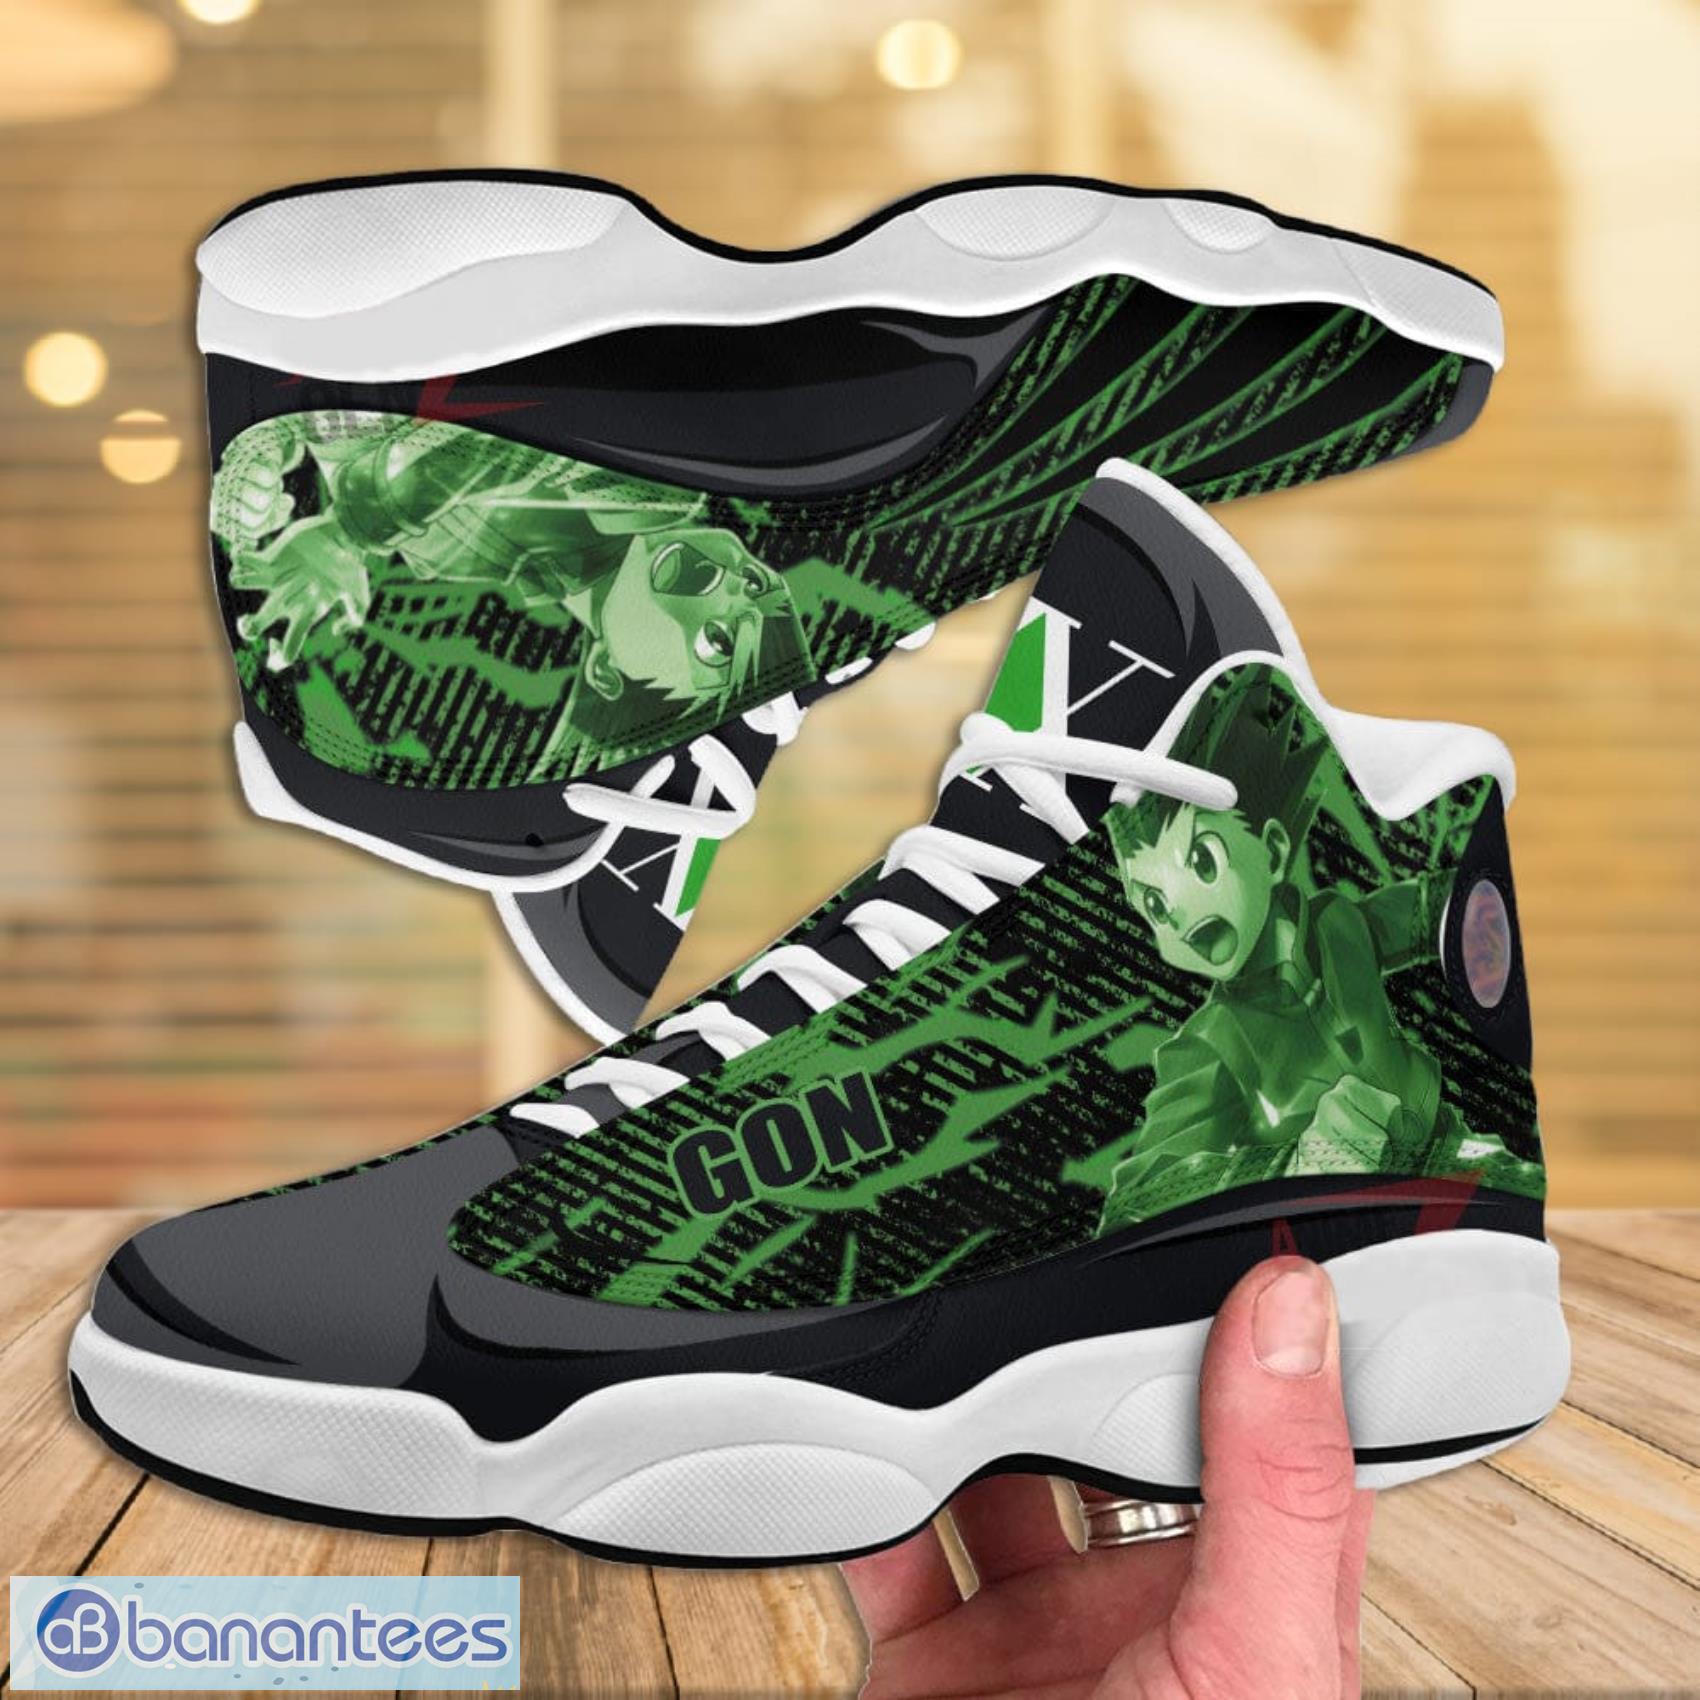 Hunter X Hunter Air Jordan 13 Sneakers Custom Gon Freecss Anime Shoes